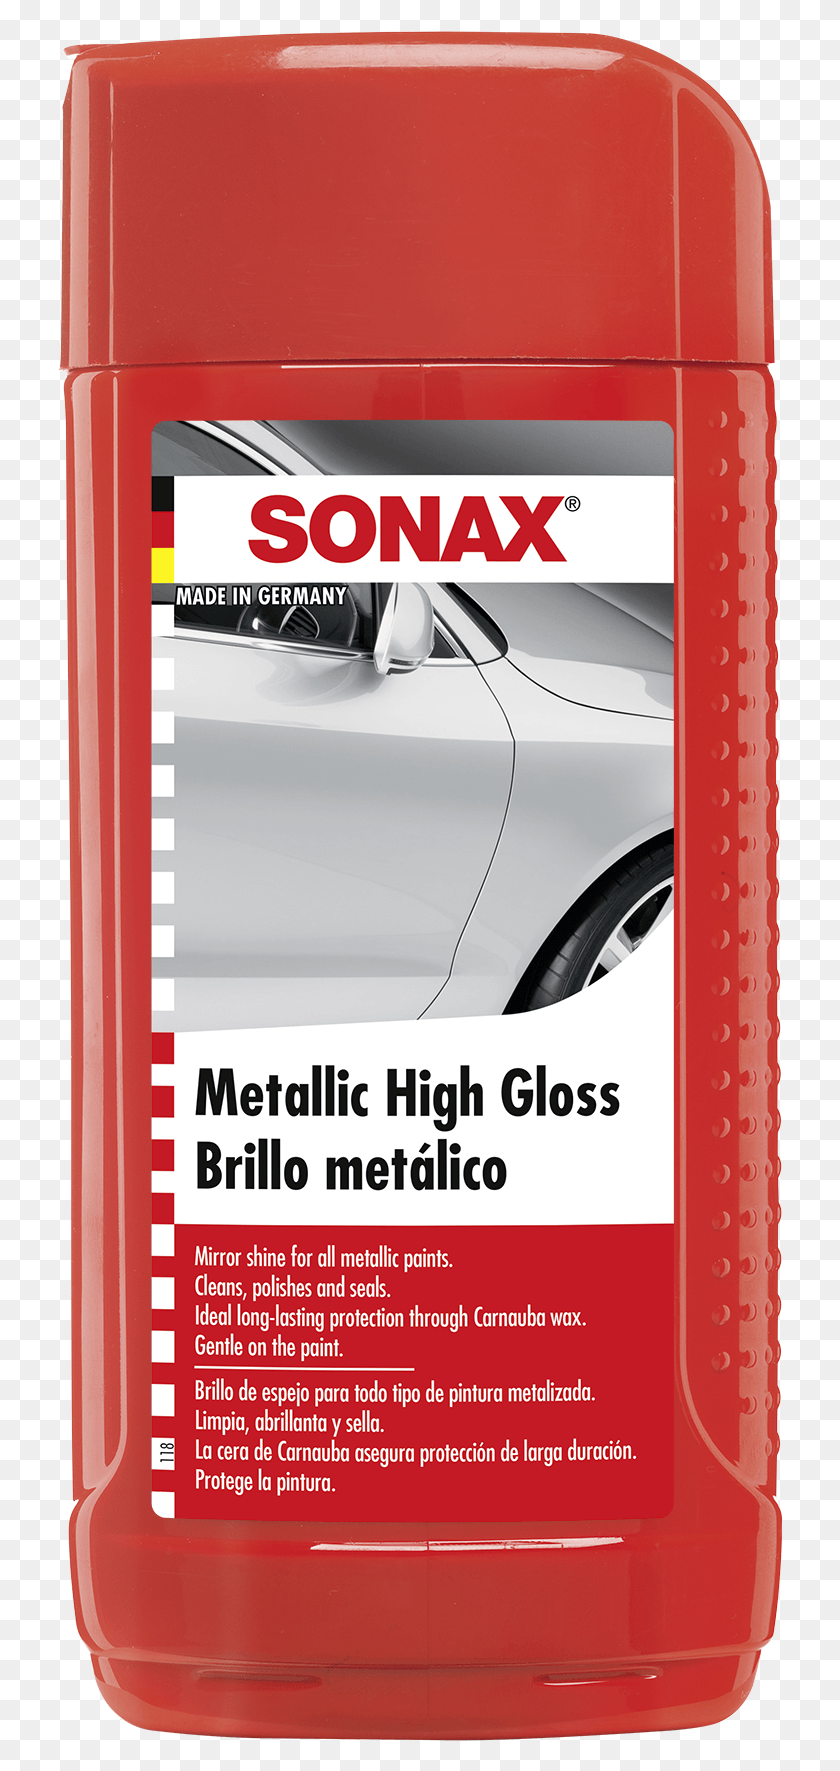 726x1711 Descargar Png Sonax Metallic High Gloss Sonax Easy Shine Wax, Teléfono Móvil, Electrónica Hd Png